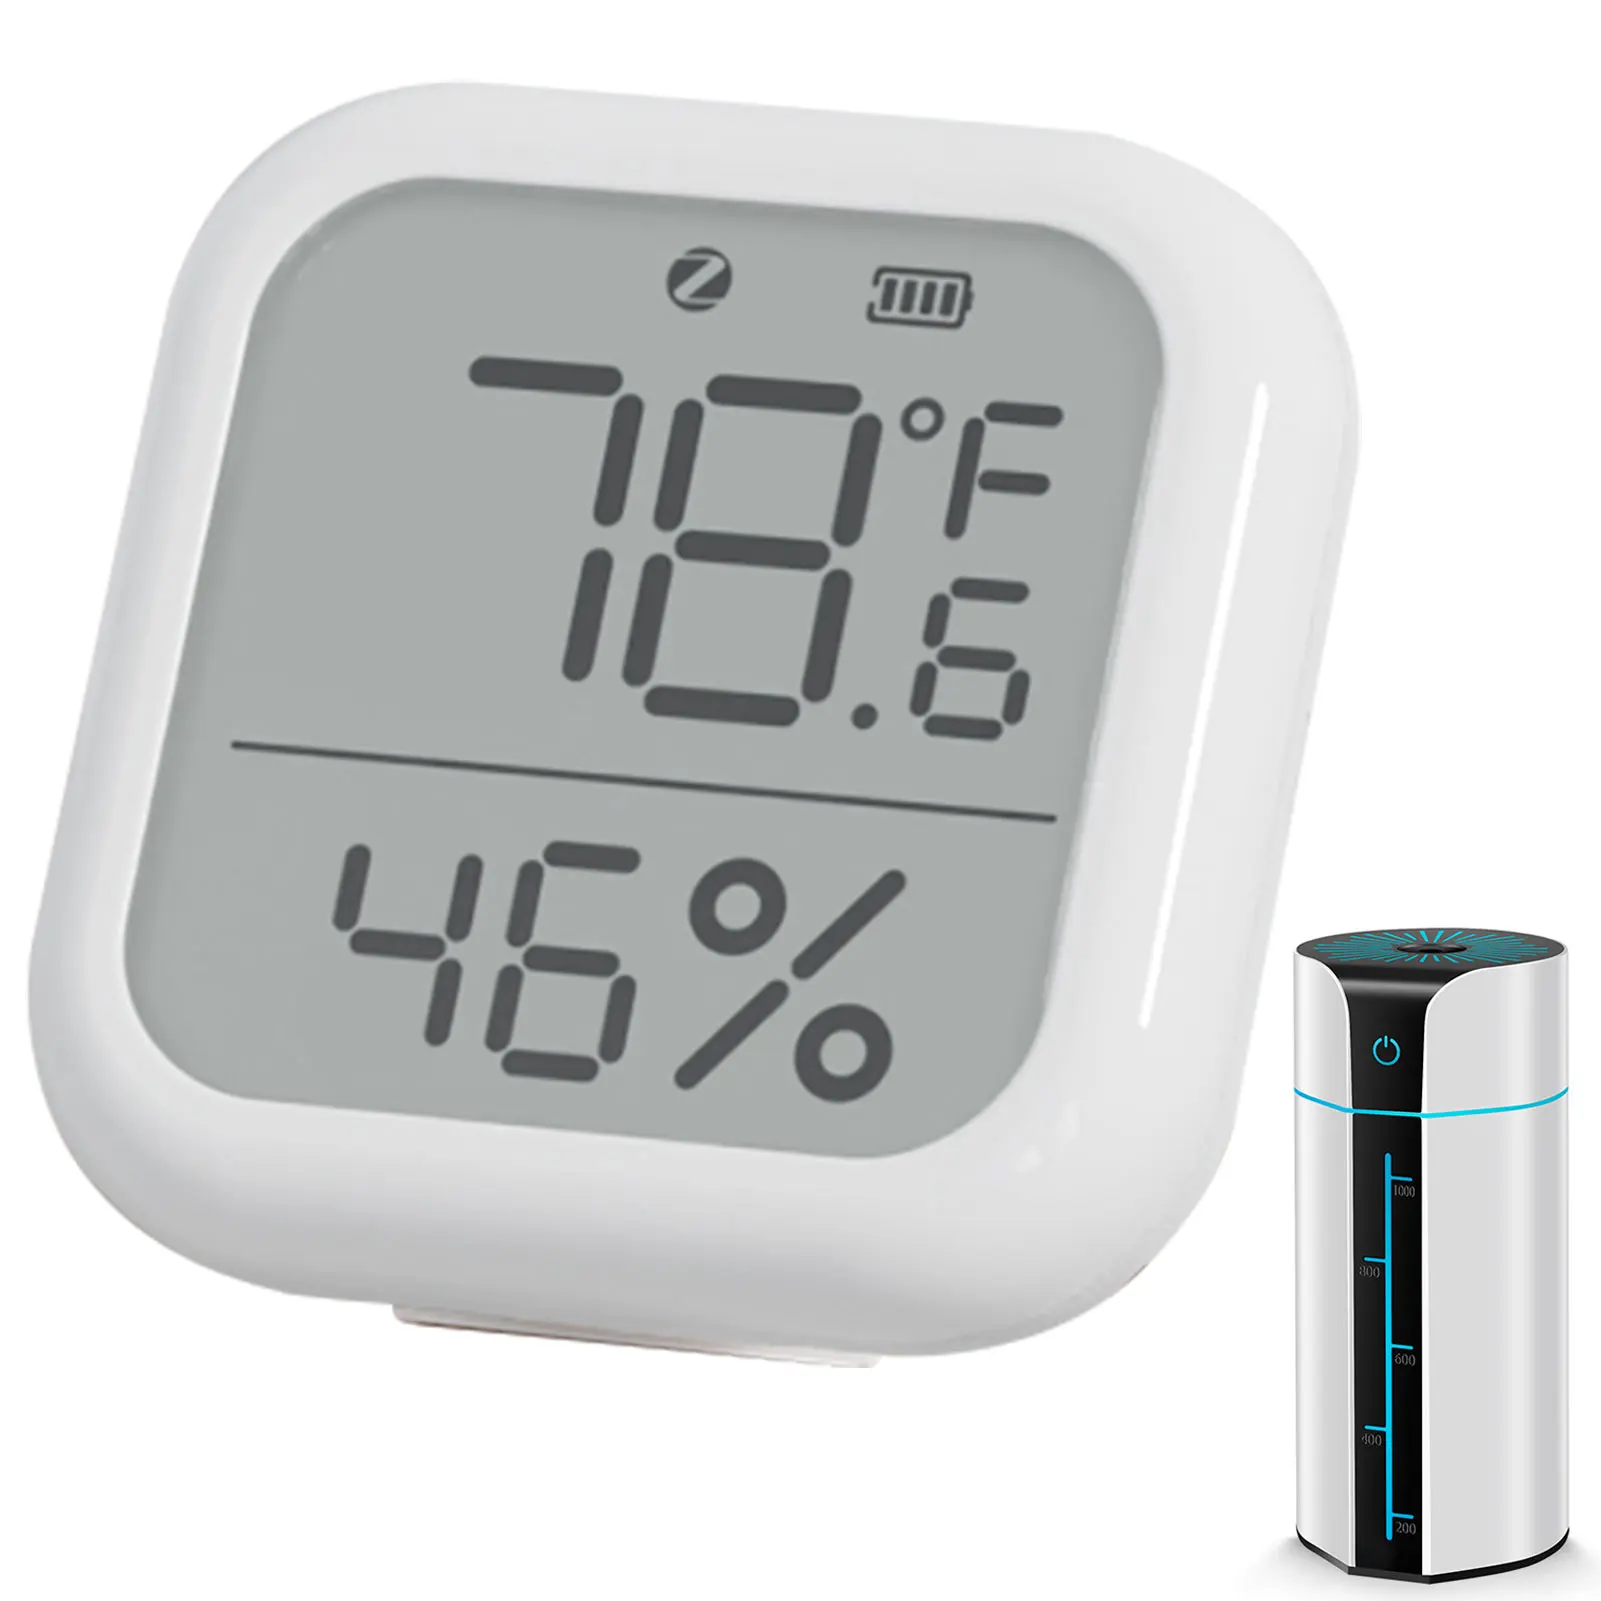 

Practical Humidity Meter And Temperature Sensor For Home Garage Greenhouse Cellar Digital Humidity Thermometer Gauge Sensor